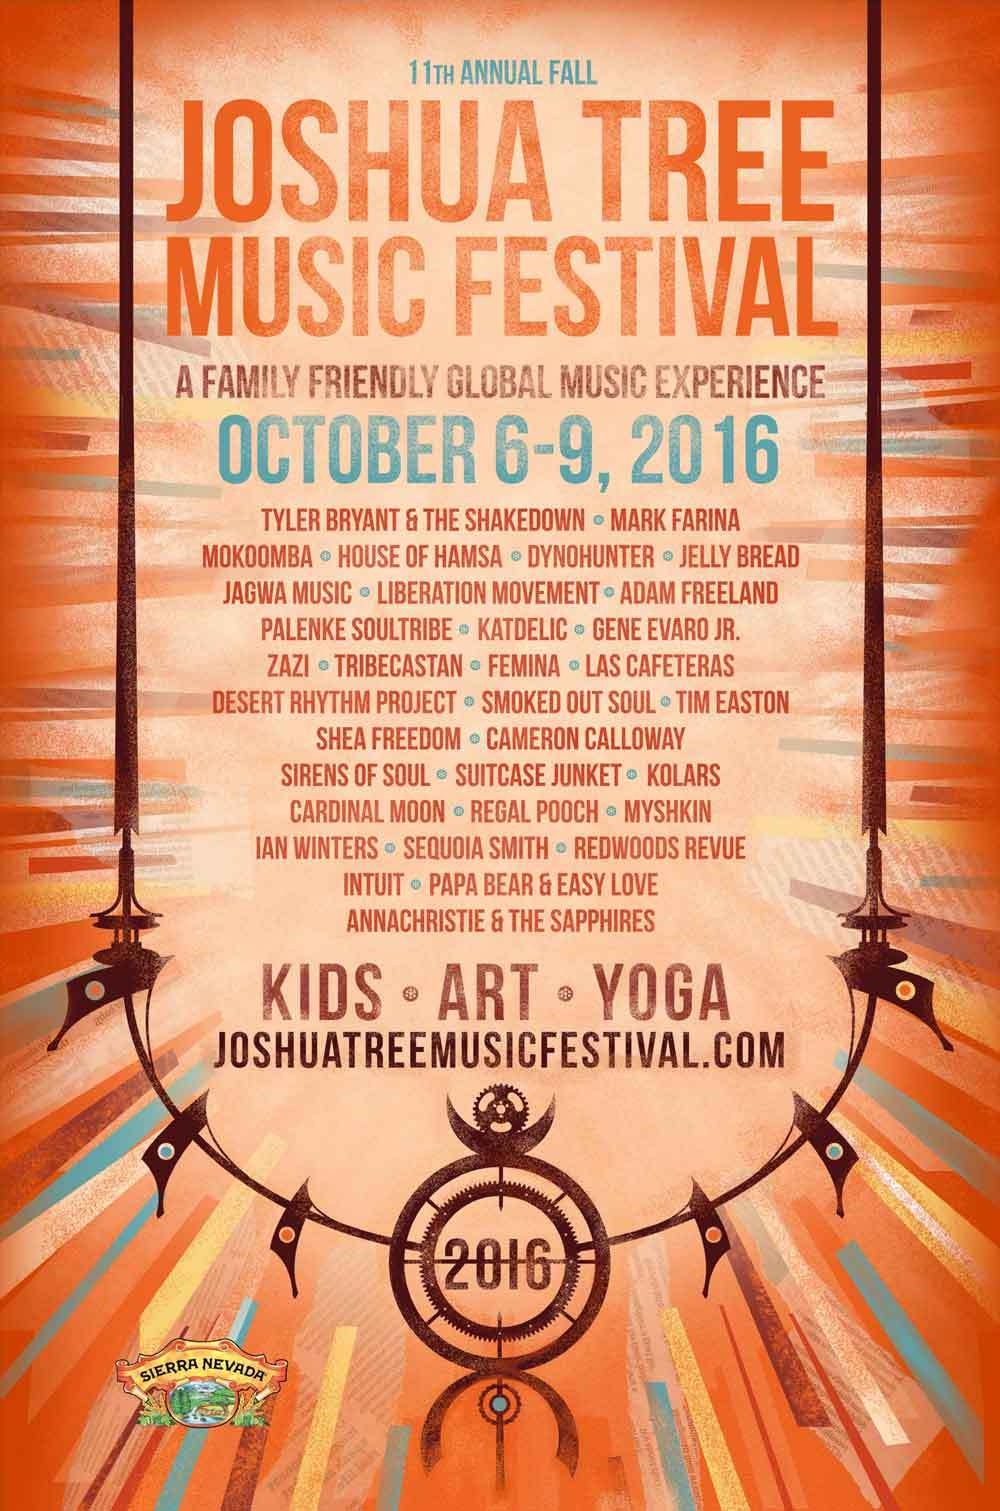 Fall Joshua Tree Music Festival 2016 Lineup poster image